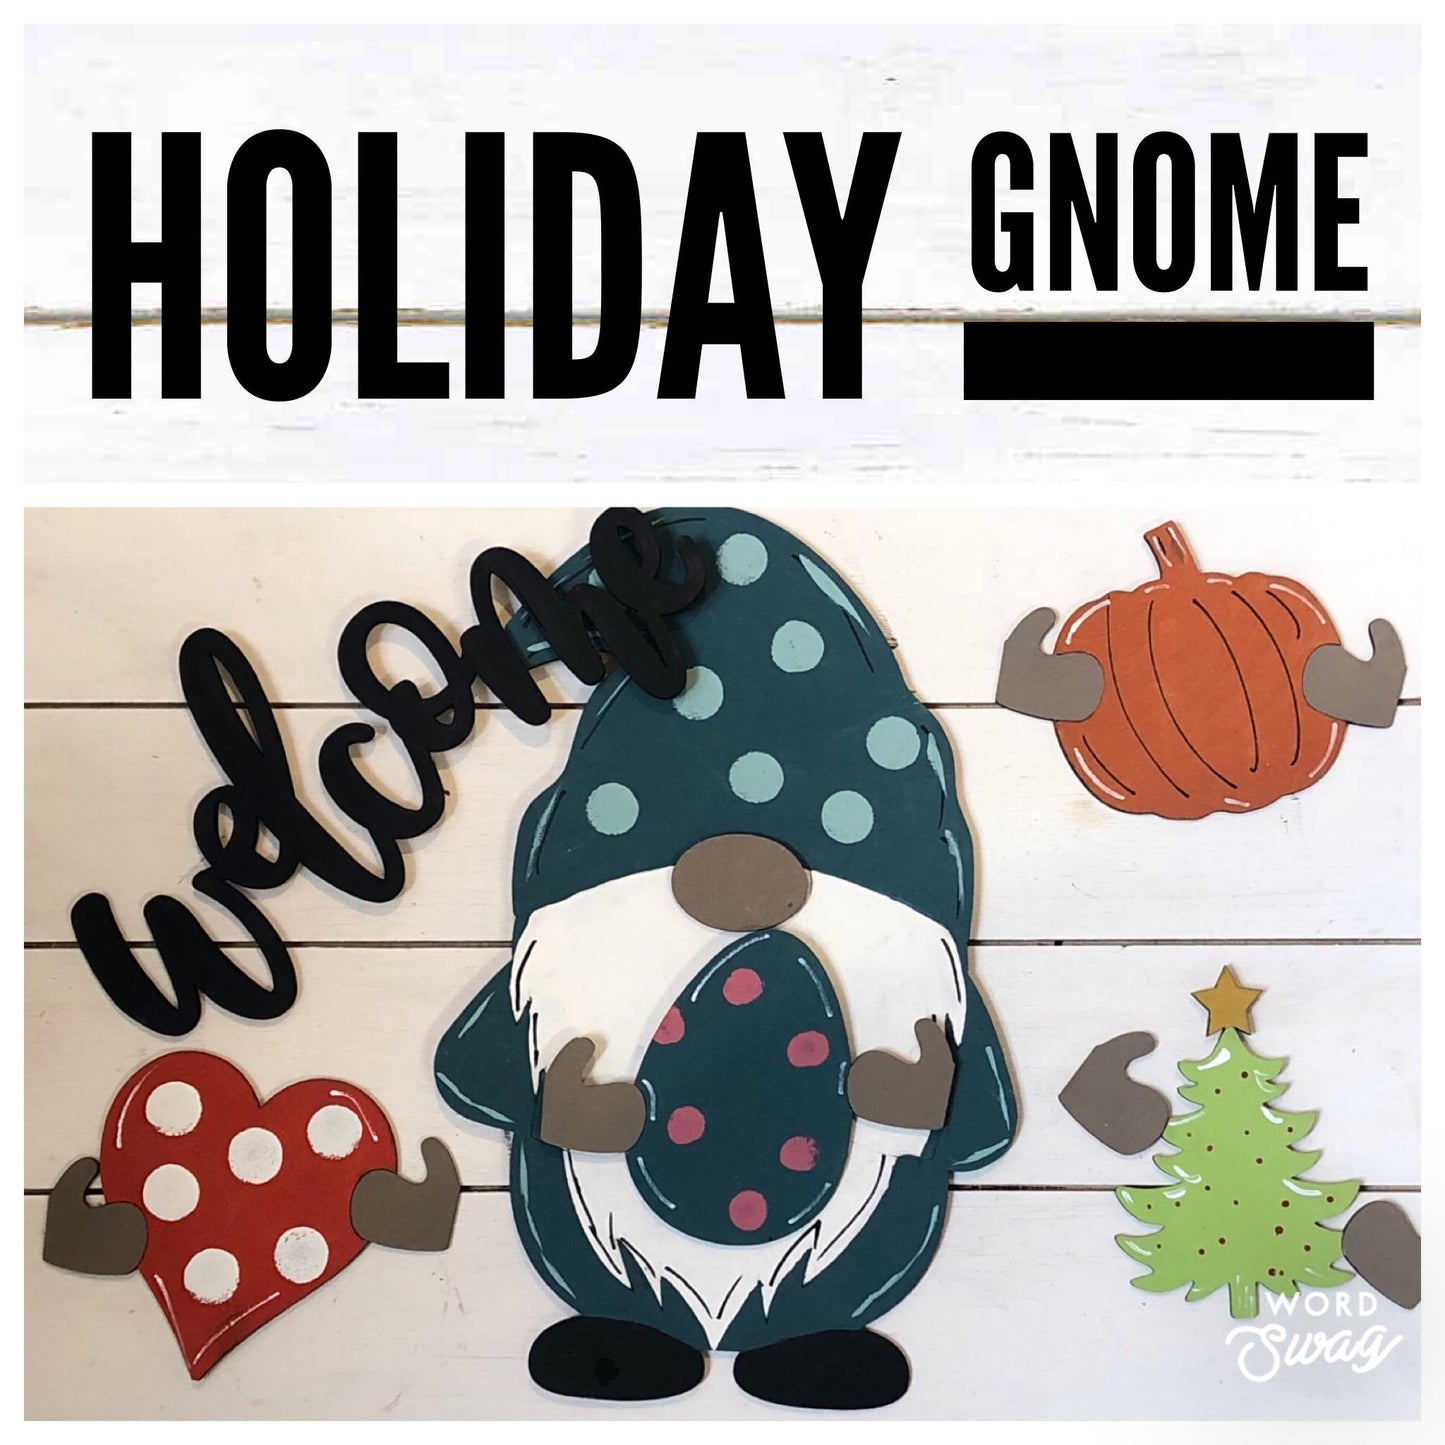 Holiday Gnome set